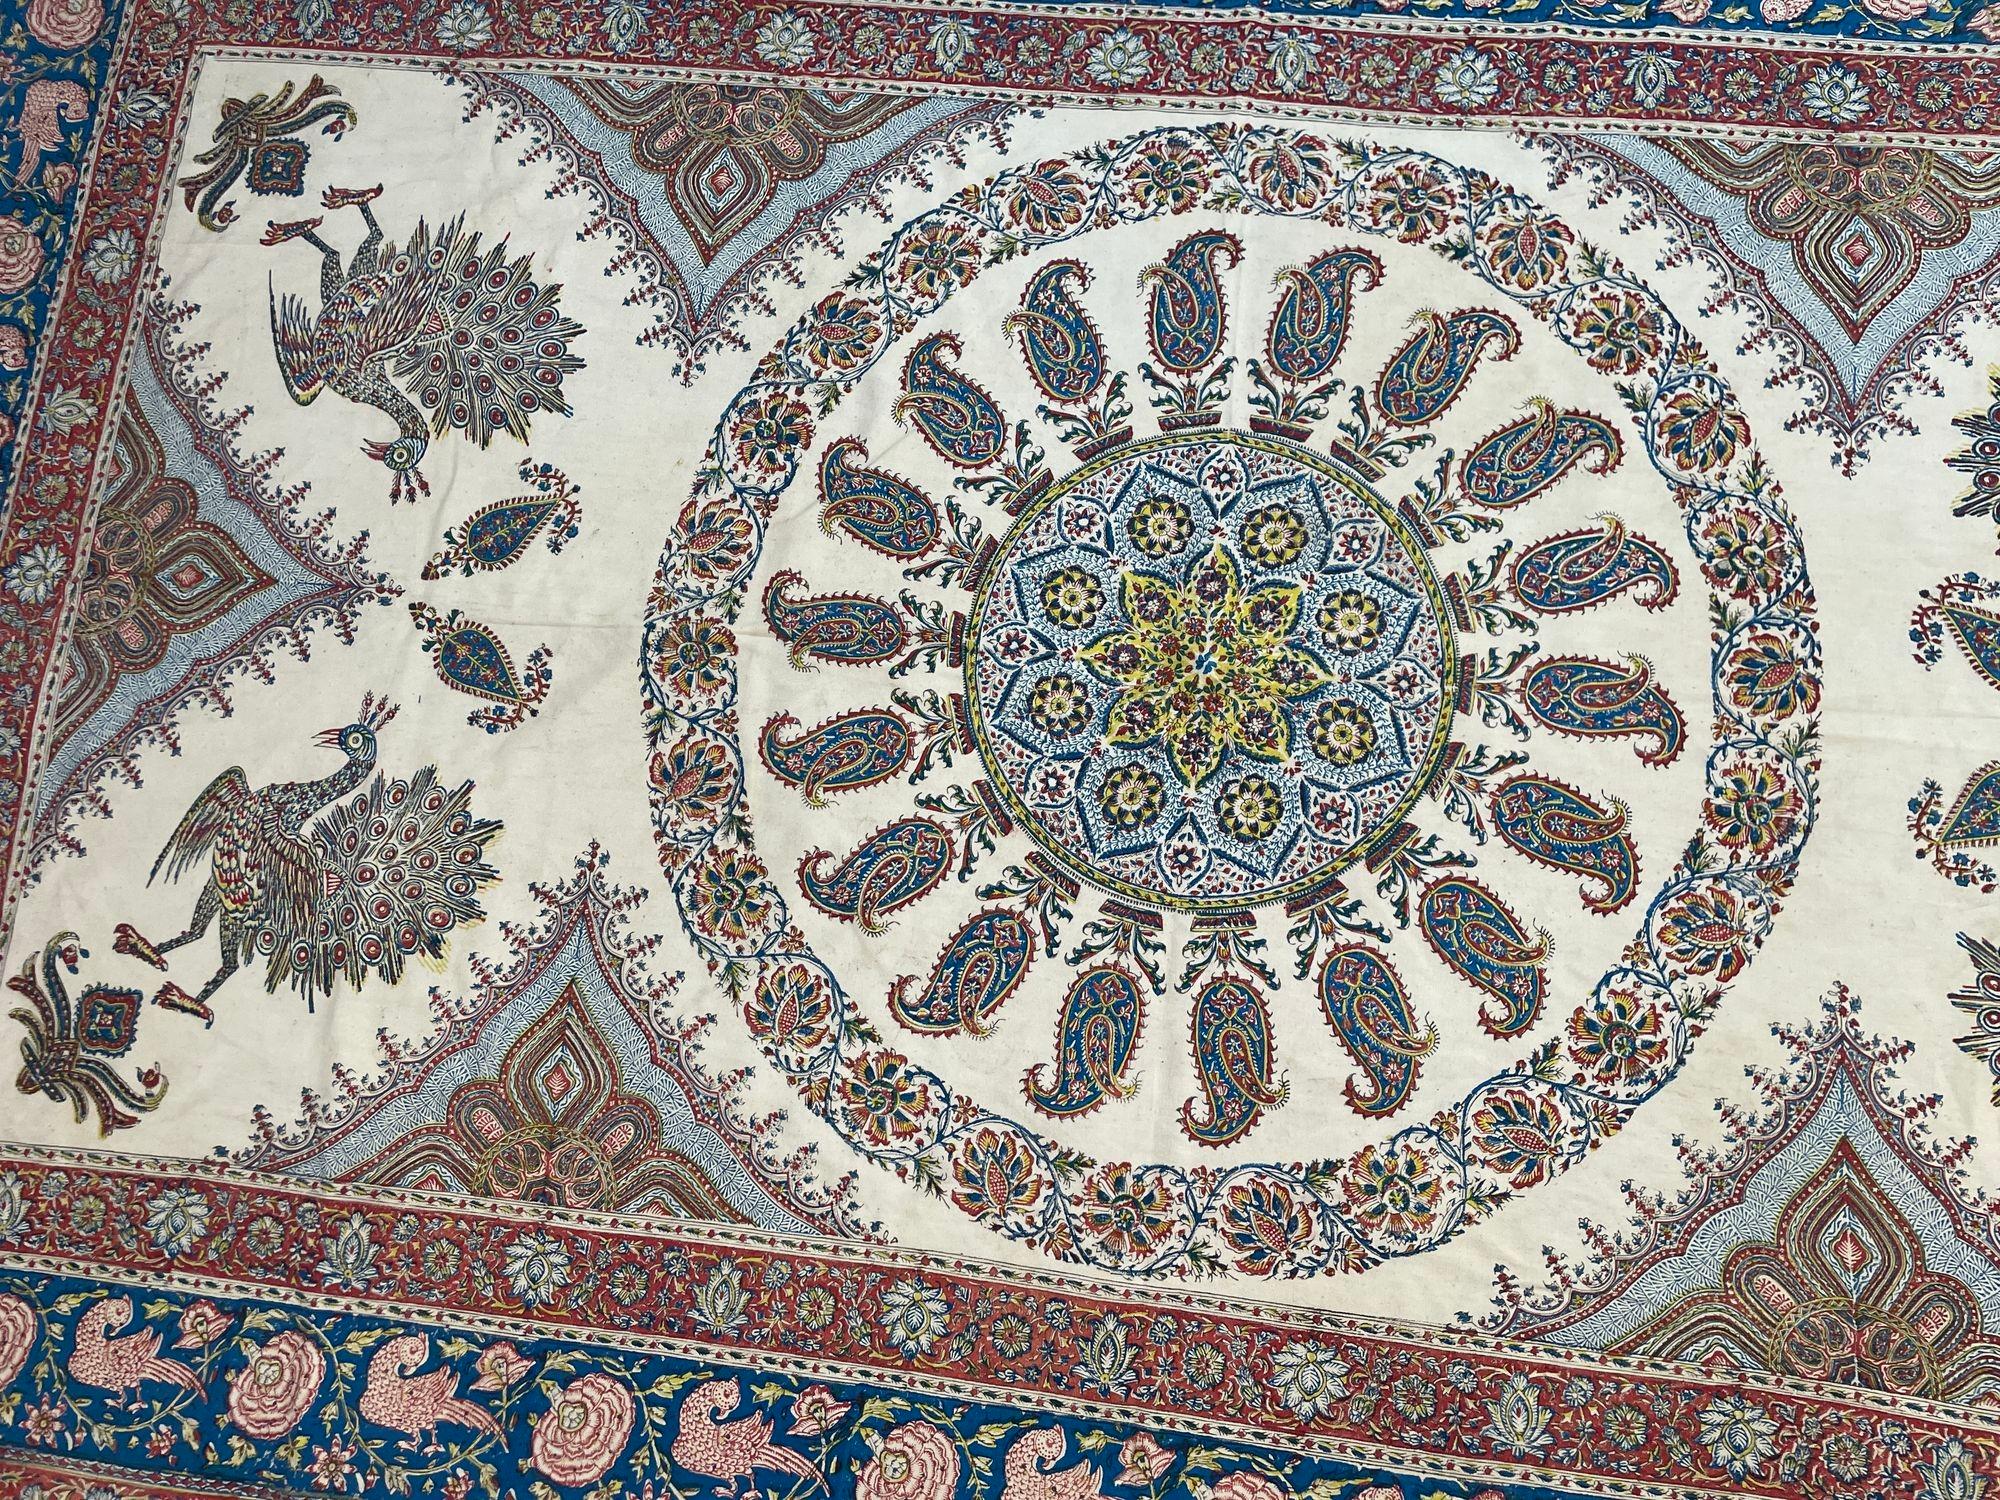 Large Isfahan Ghalamkar Persian Paisley Textile Block Printed 1950s For Sale 2